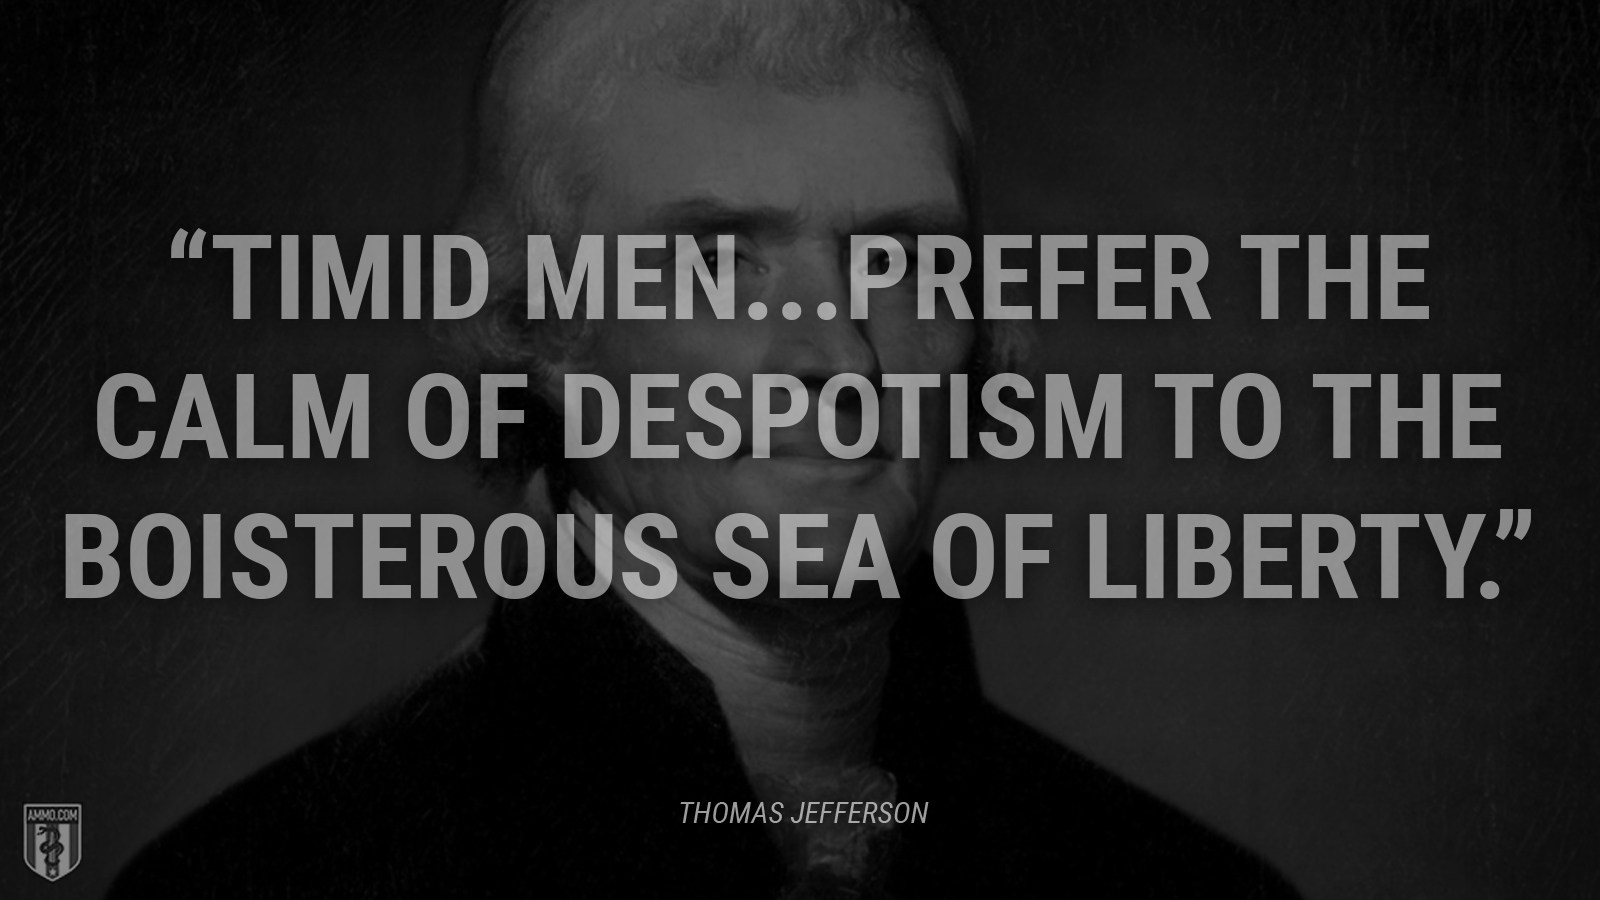 “Timid men...prefer the calm of despotism to the boisterous sea of liberty.” - Thomas Jefferson